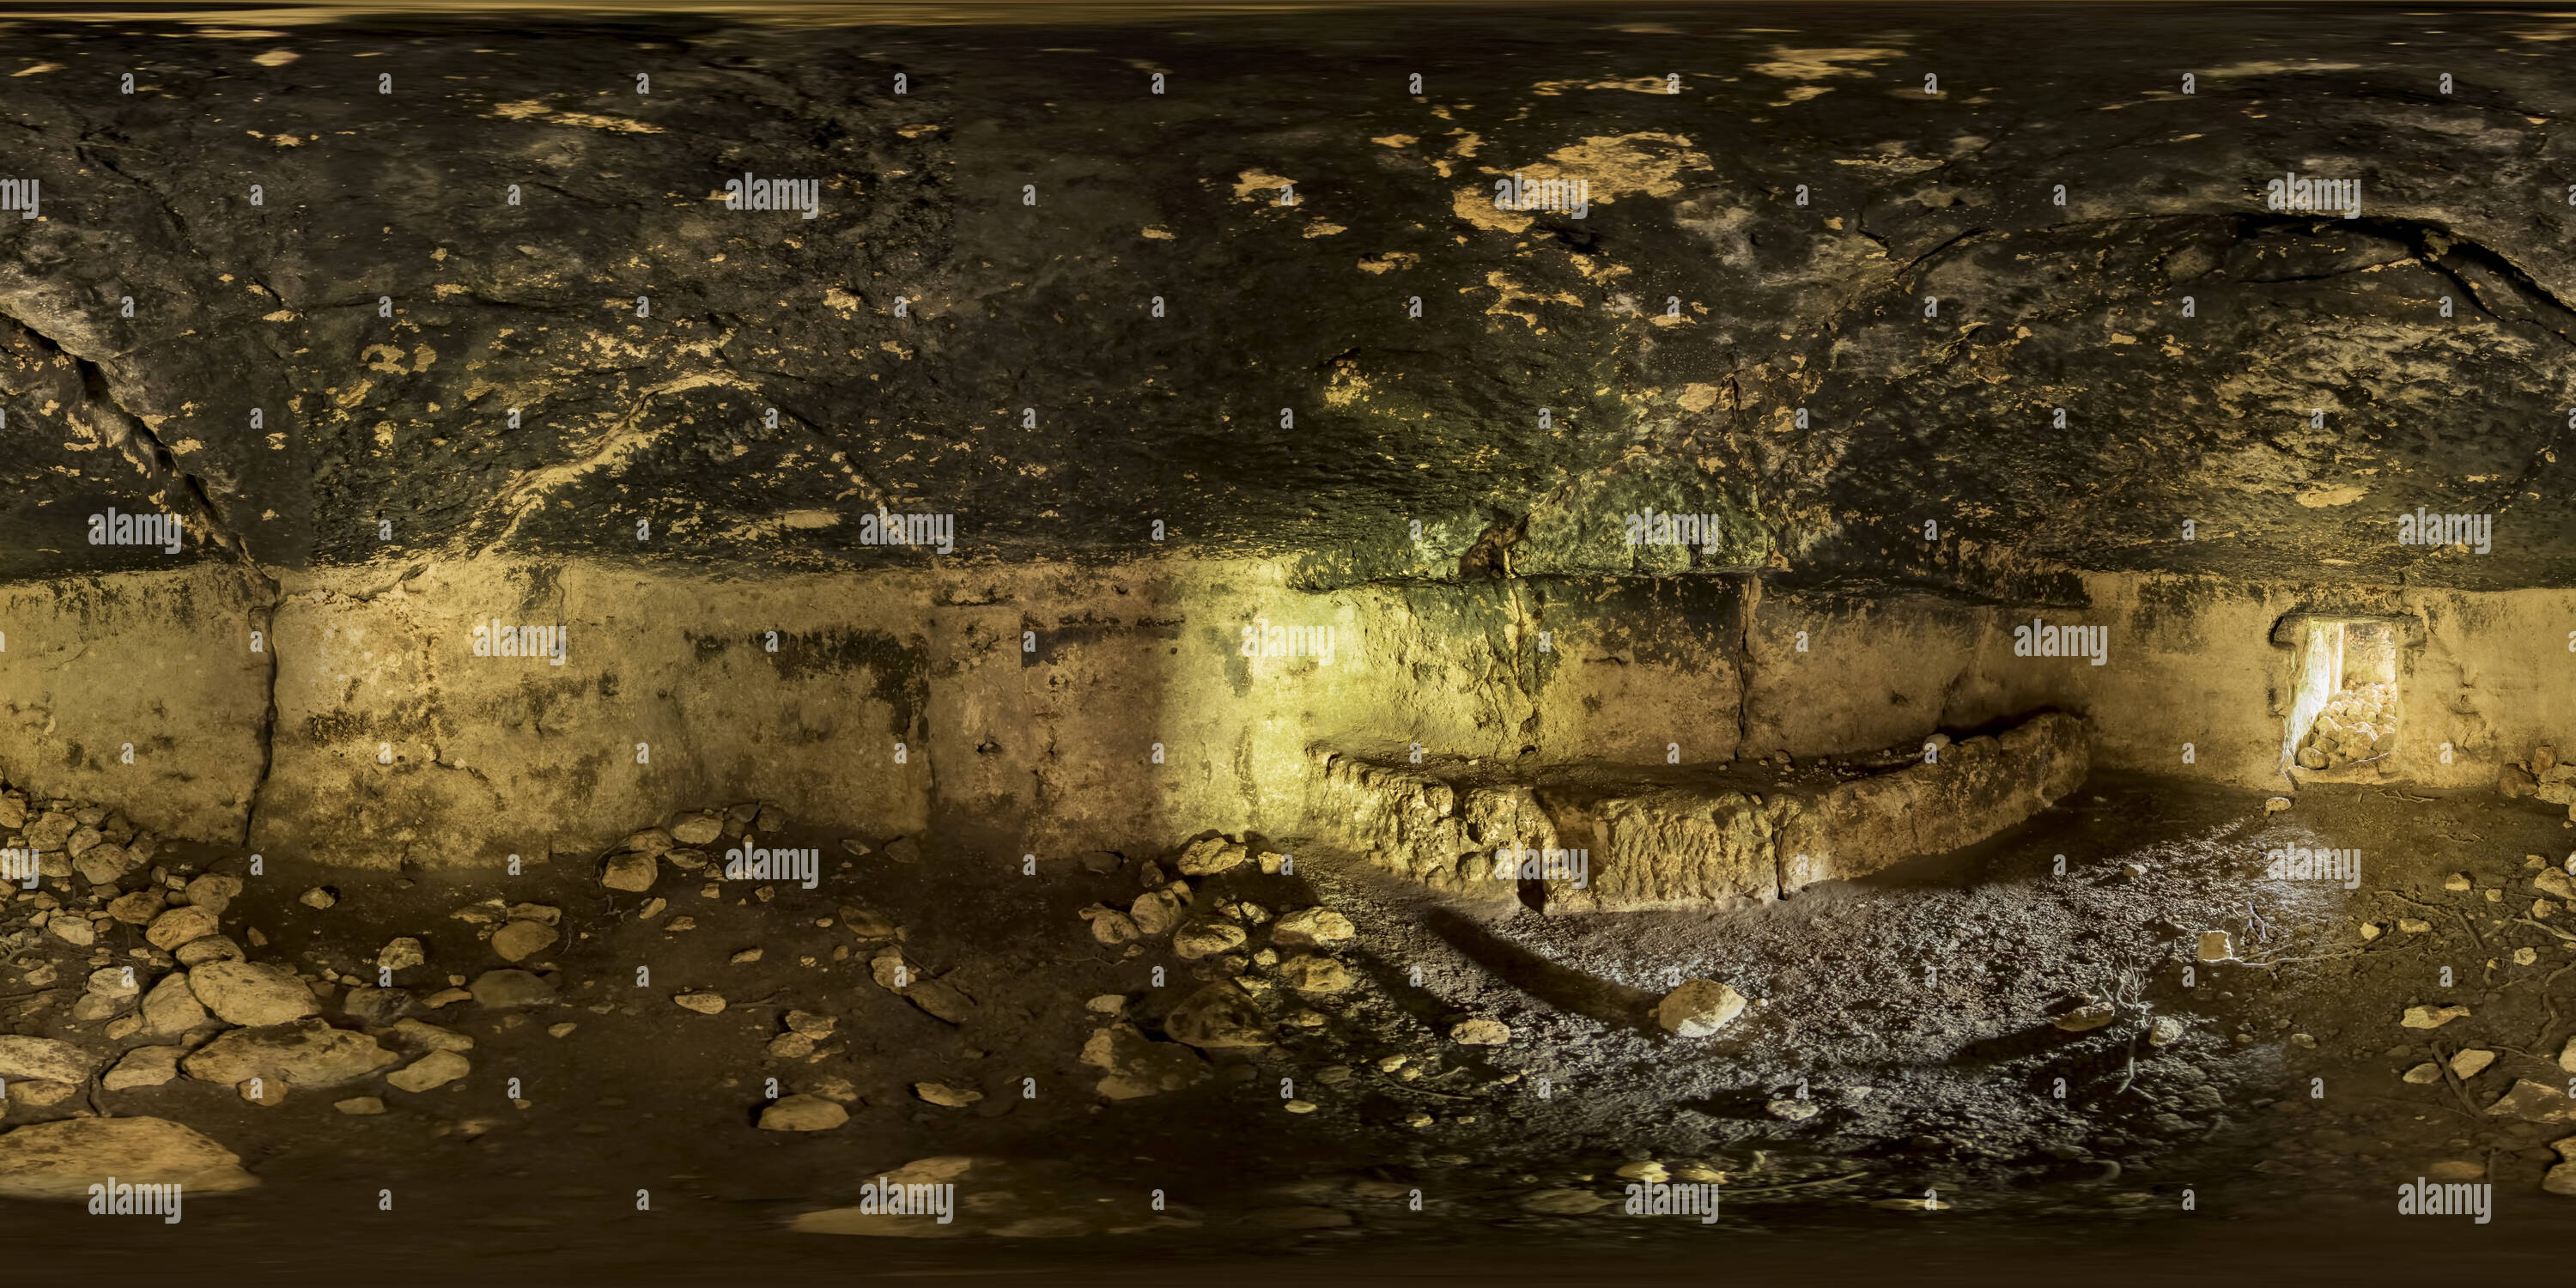 360 degree panoramic view of The Cave Church Of Elmakuzu Bozyazi Vr Mersin 27d